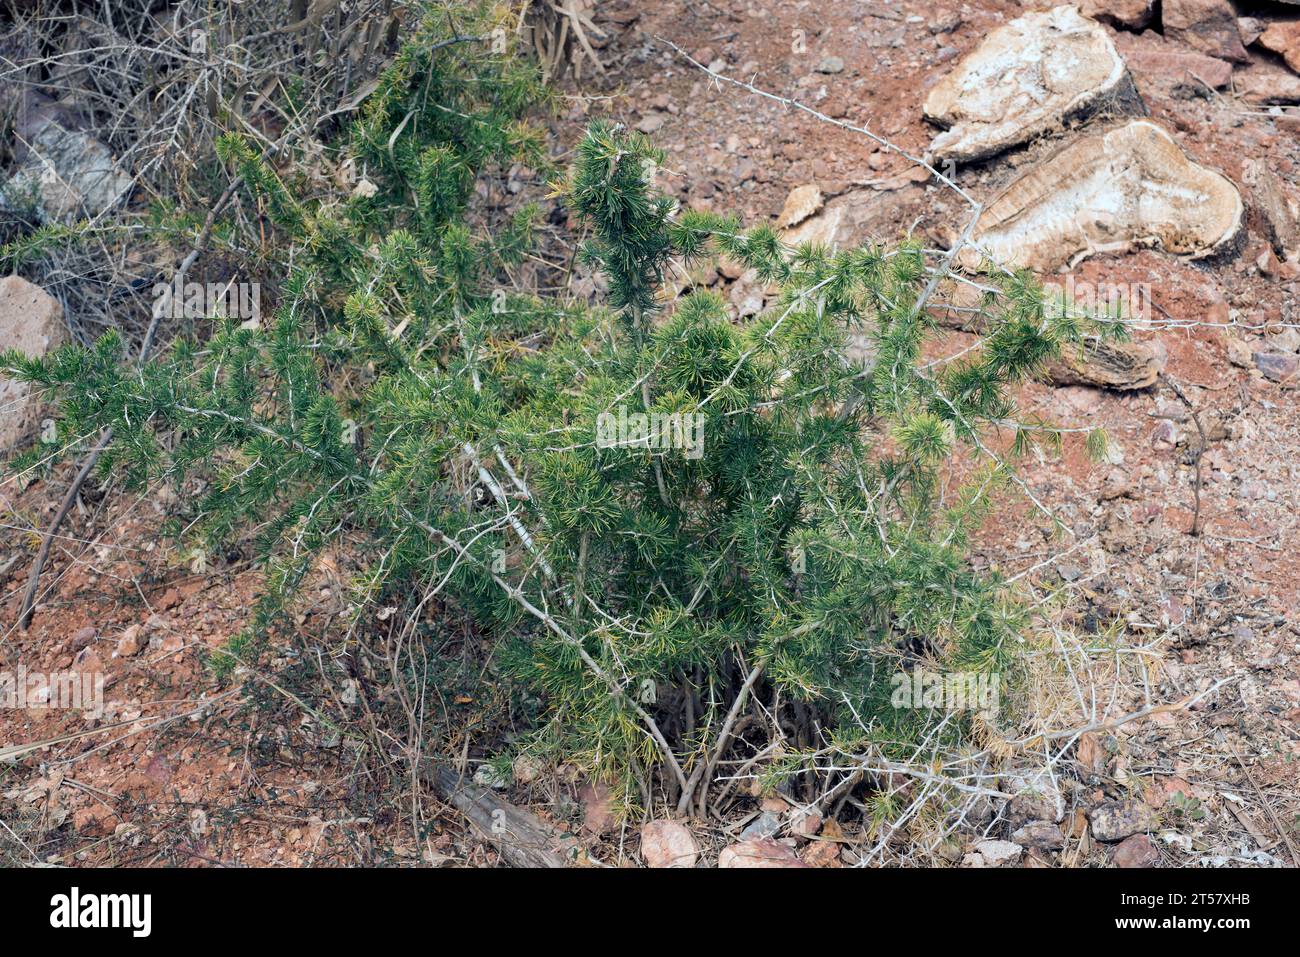 Esparraguera blanca (Asparagus albus) is a shrub native to western Mediterranean basin. This photo was taken in Cabo de Gata Natural Park, Almeria pro Stock Photo